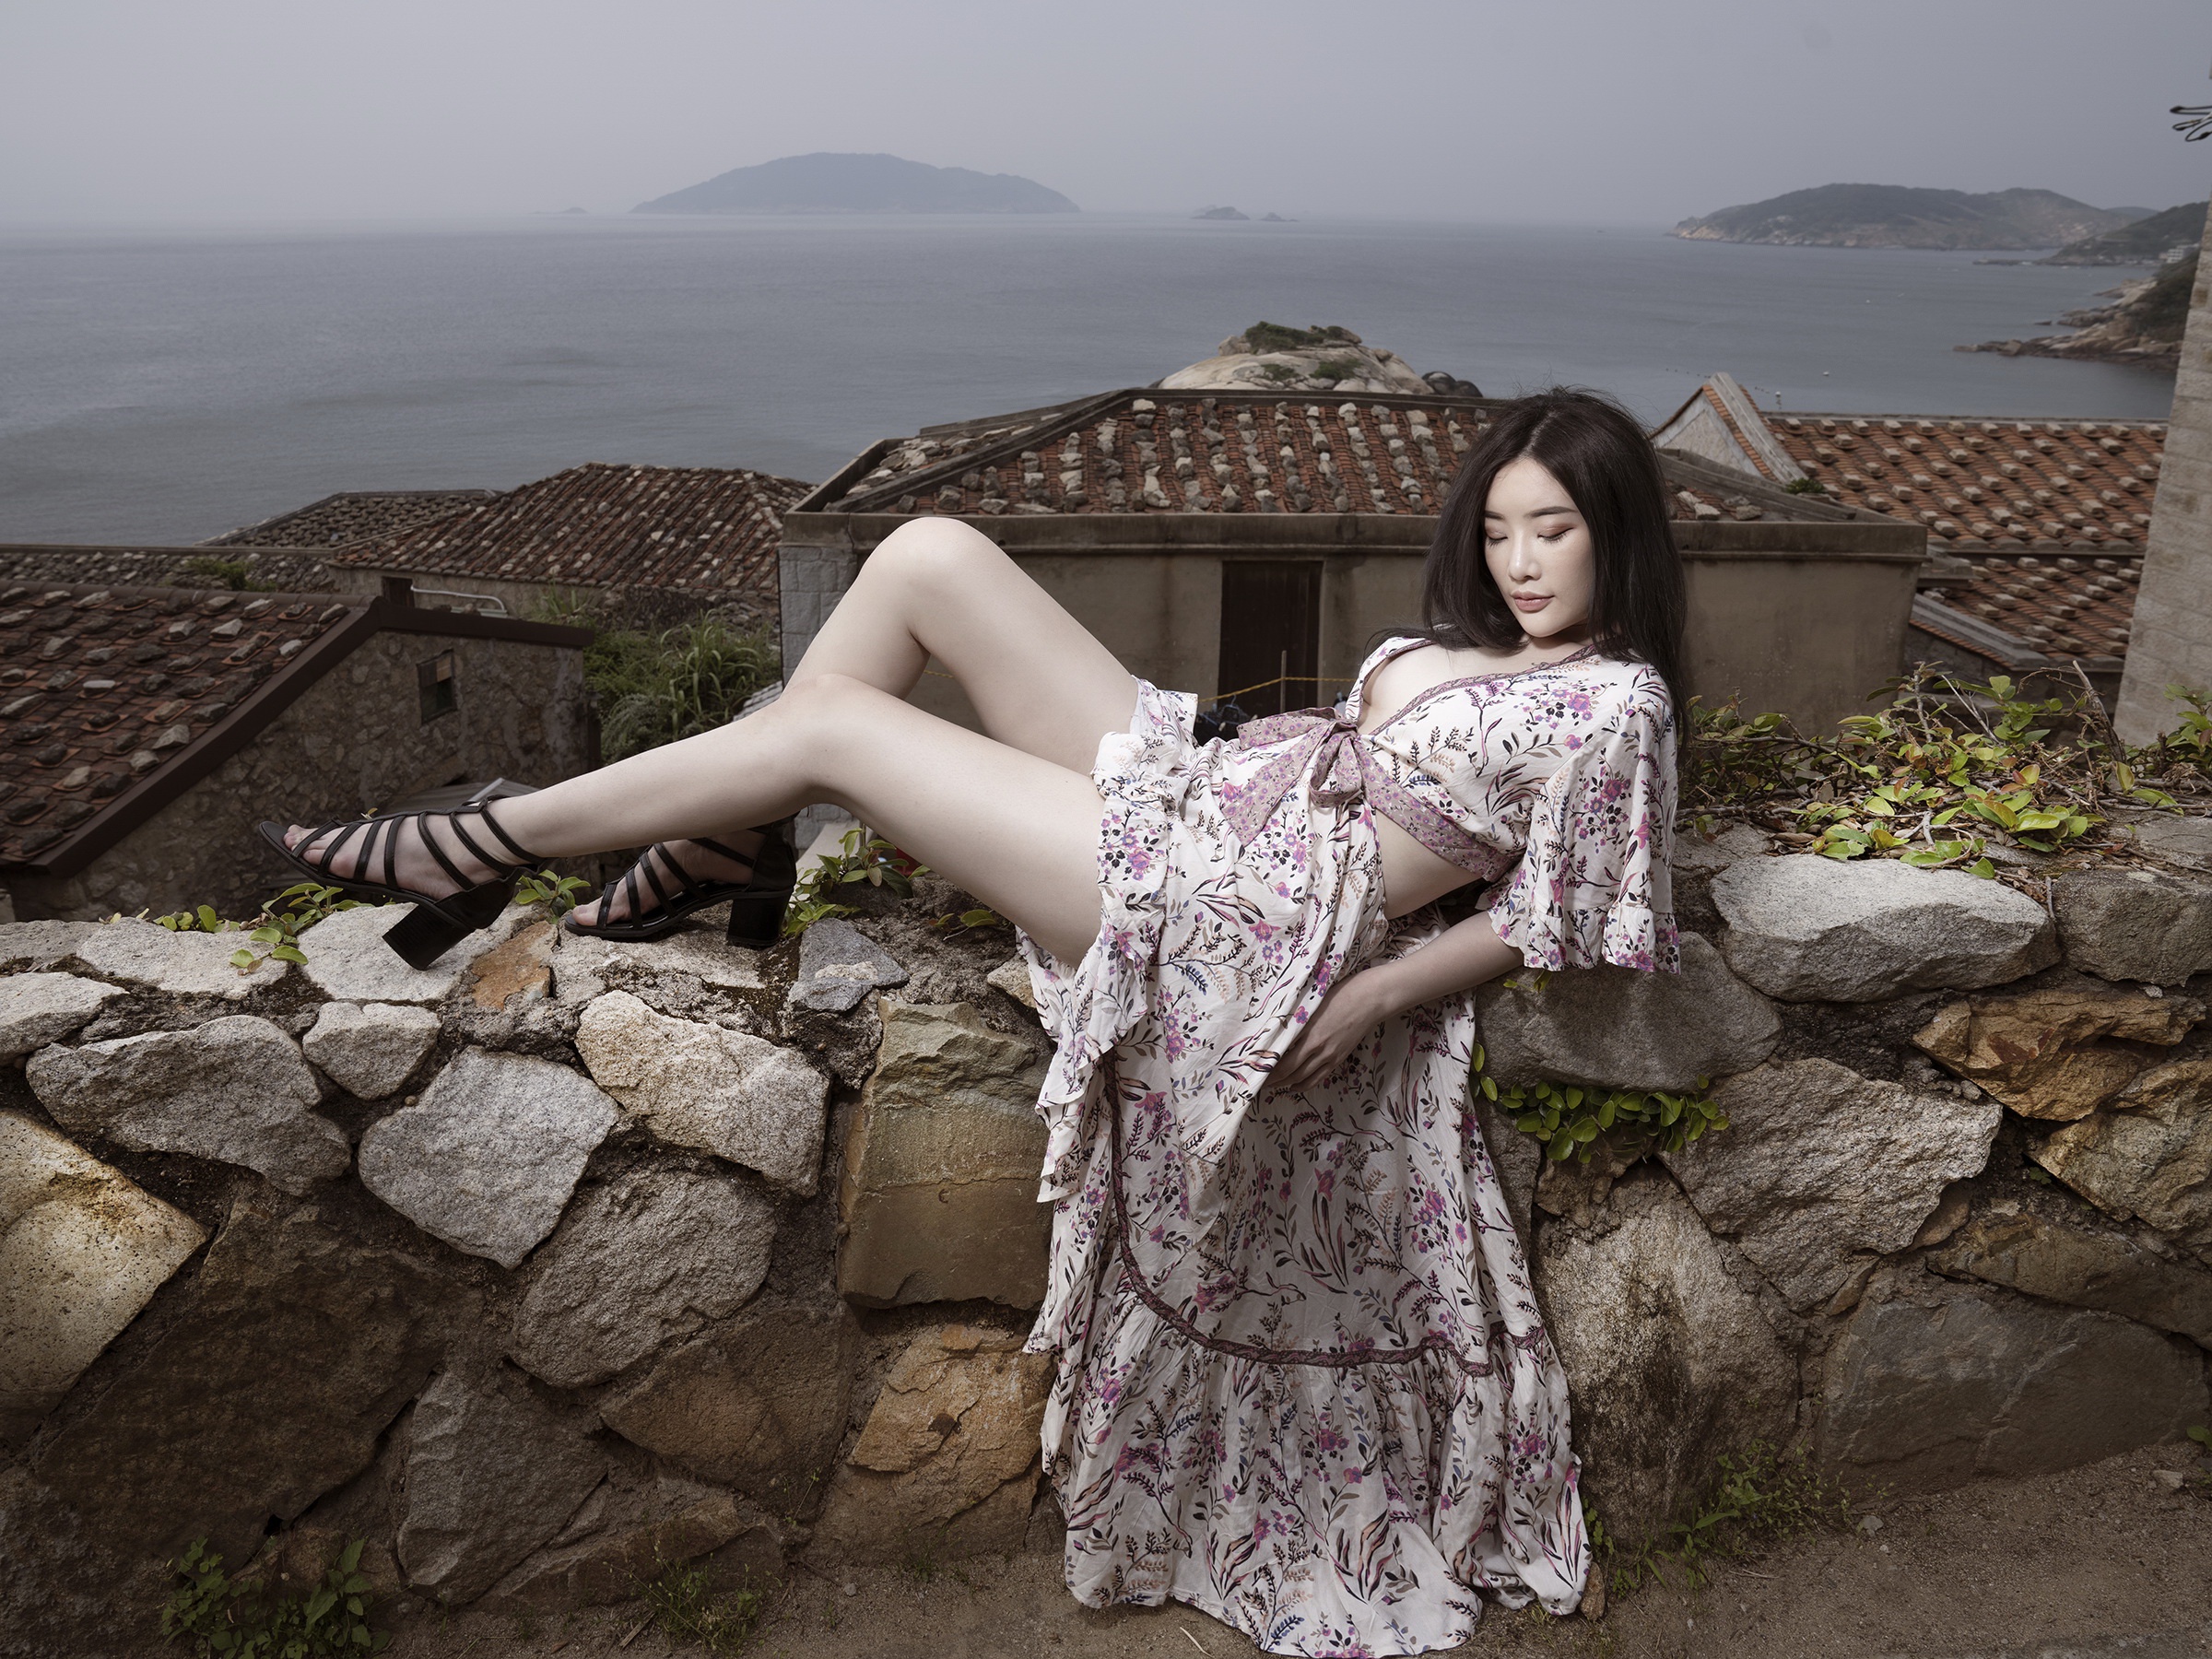 Asian Model Women Long Hair Dark Hair Wall Lying Down Barefoot Sandal Sea Dress Closed Eyes House Ov 2400x1800